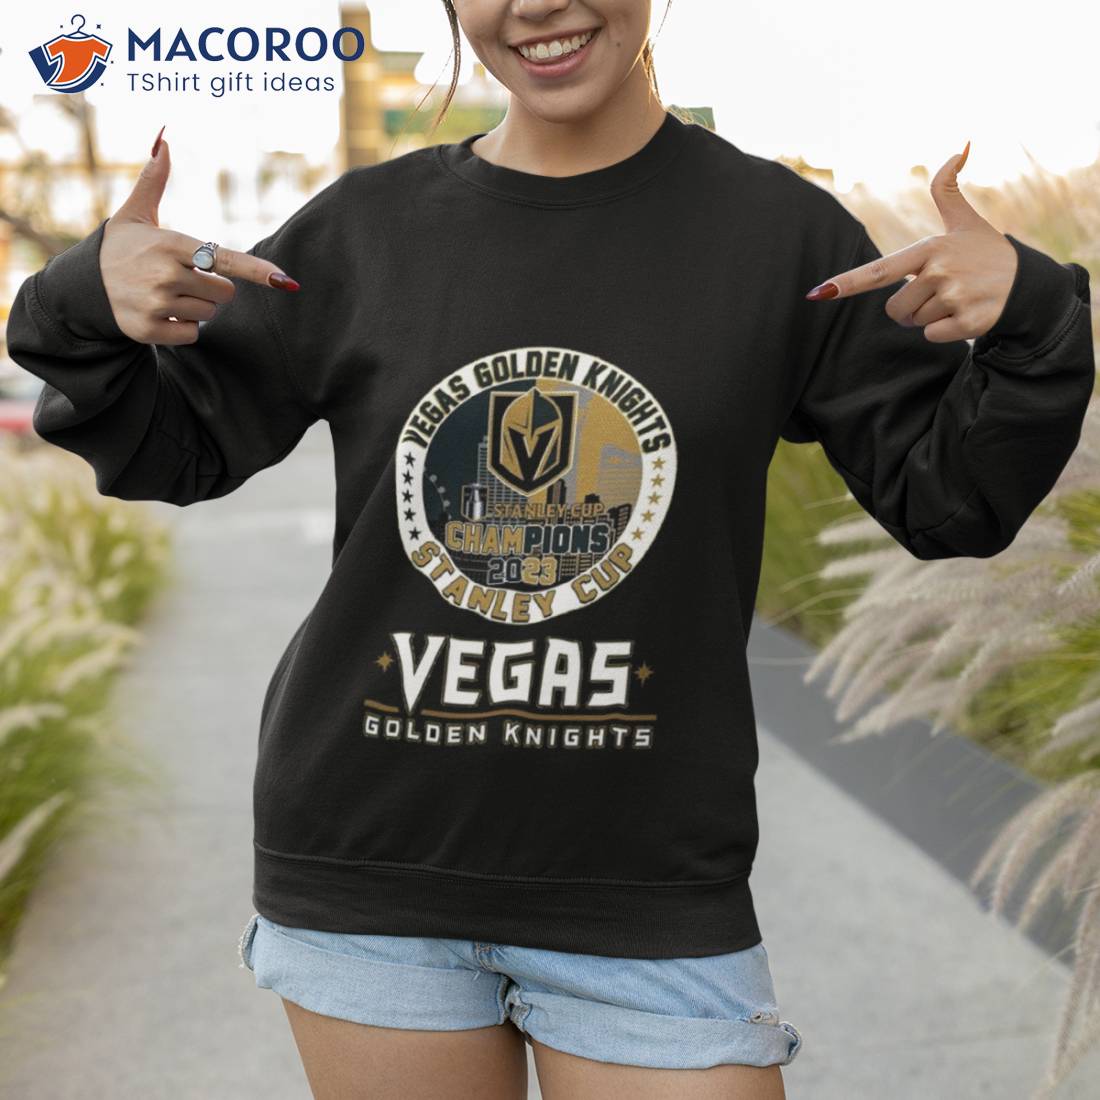 Las Vegas Golden Knights Women's Racerback Hockey Tank, Size: XS, Gray